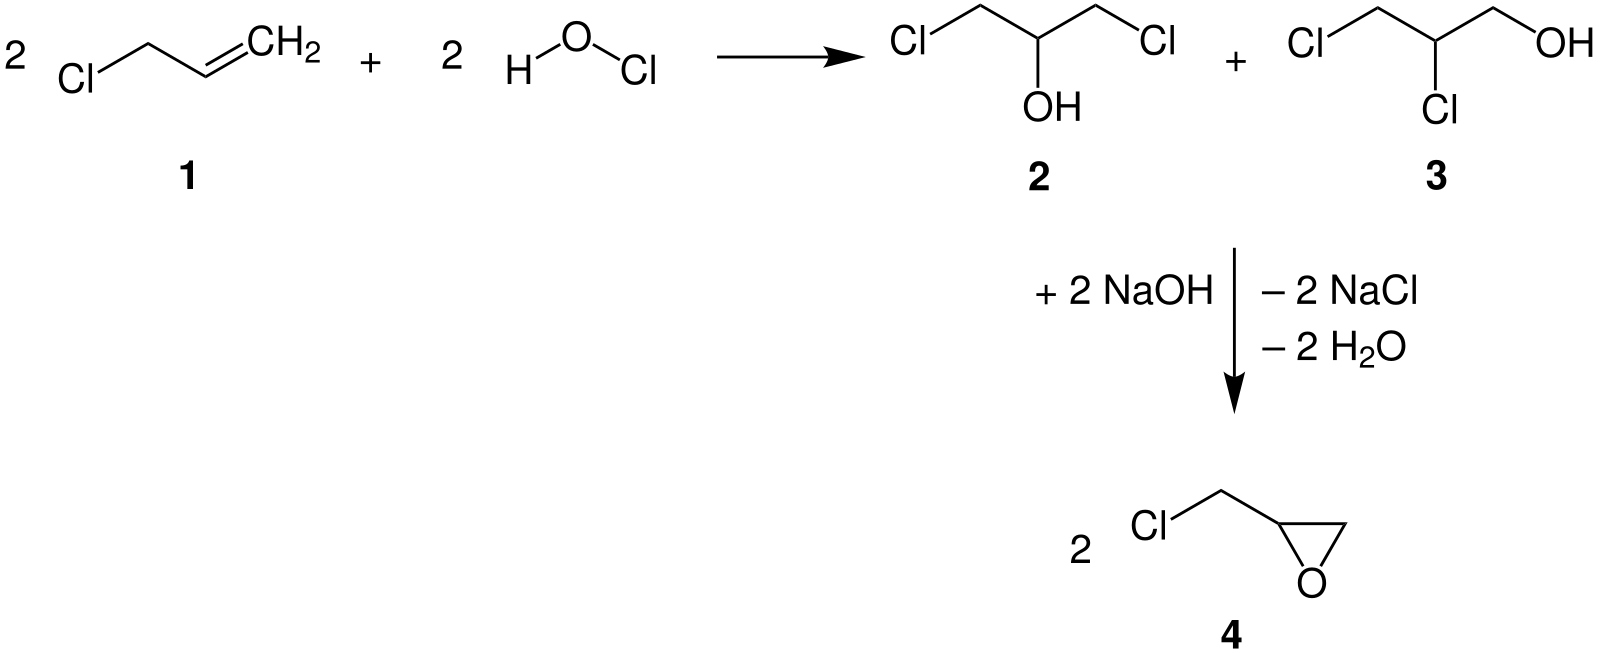 Б щелочной гидролиз 2 2 дихлорпропана. 1 2 Дихлорпропан. 1 2 Дихлорпропан формула. Эпихлоргидрин реакции. Щелочной гидролиз 1 2 дихлорпропана.